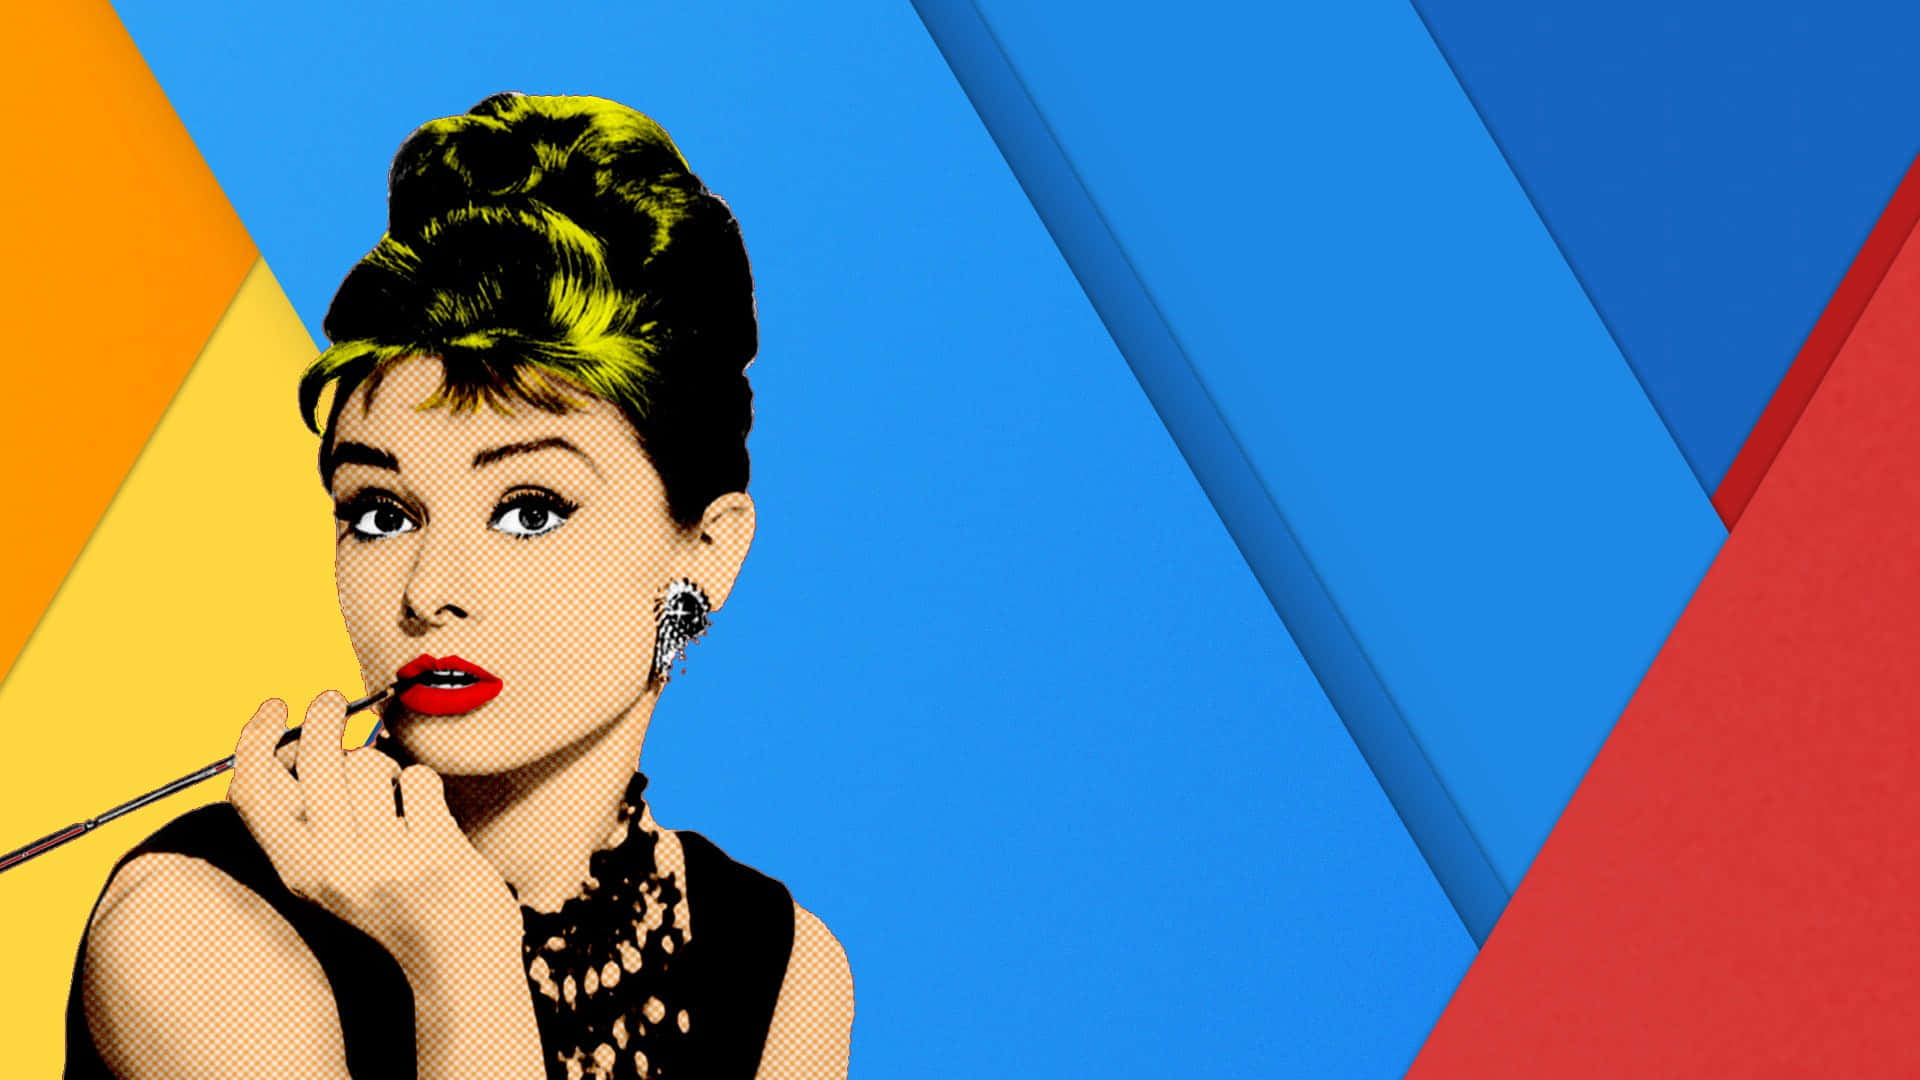 "The eternal elegance of Audrey Hepburn".